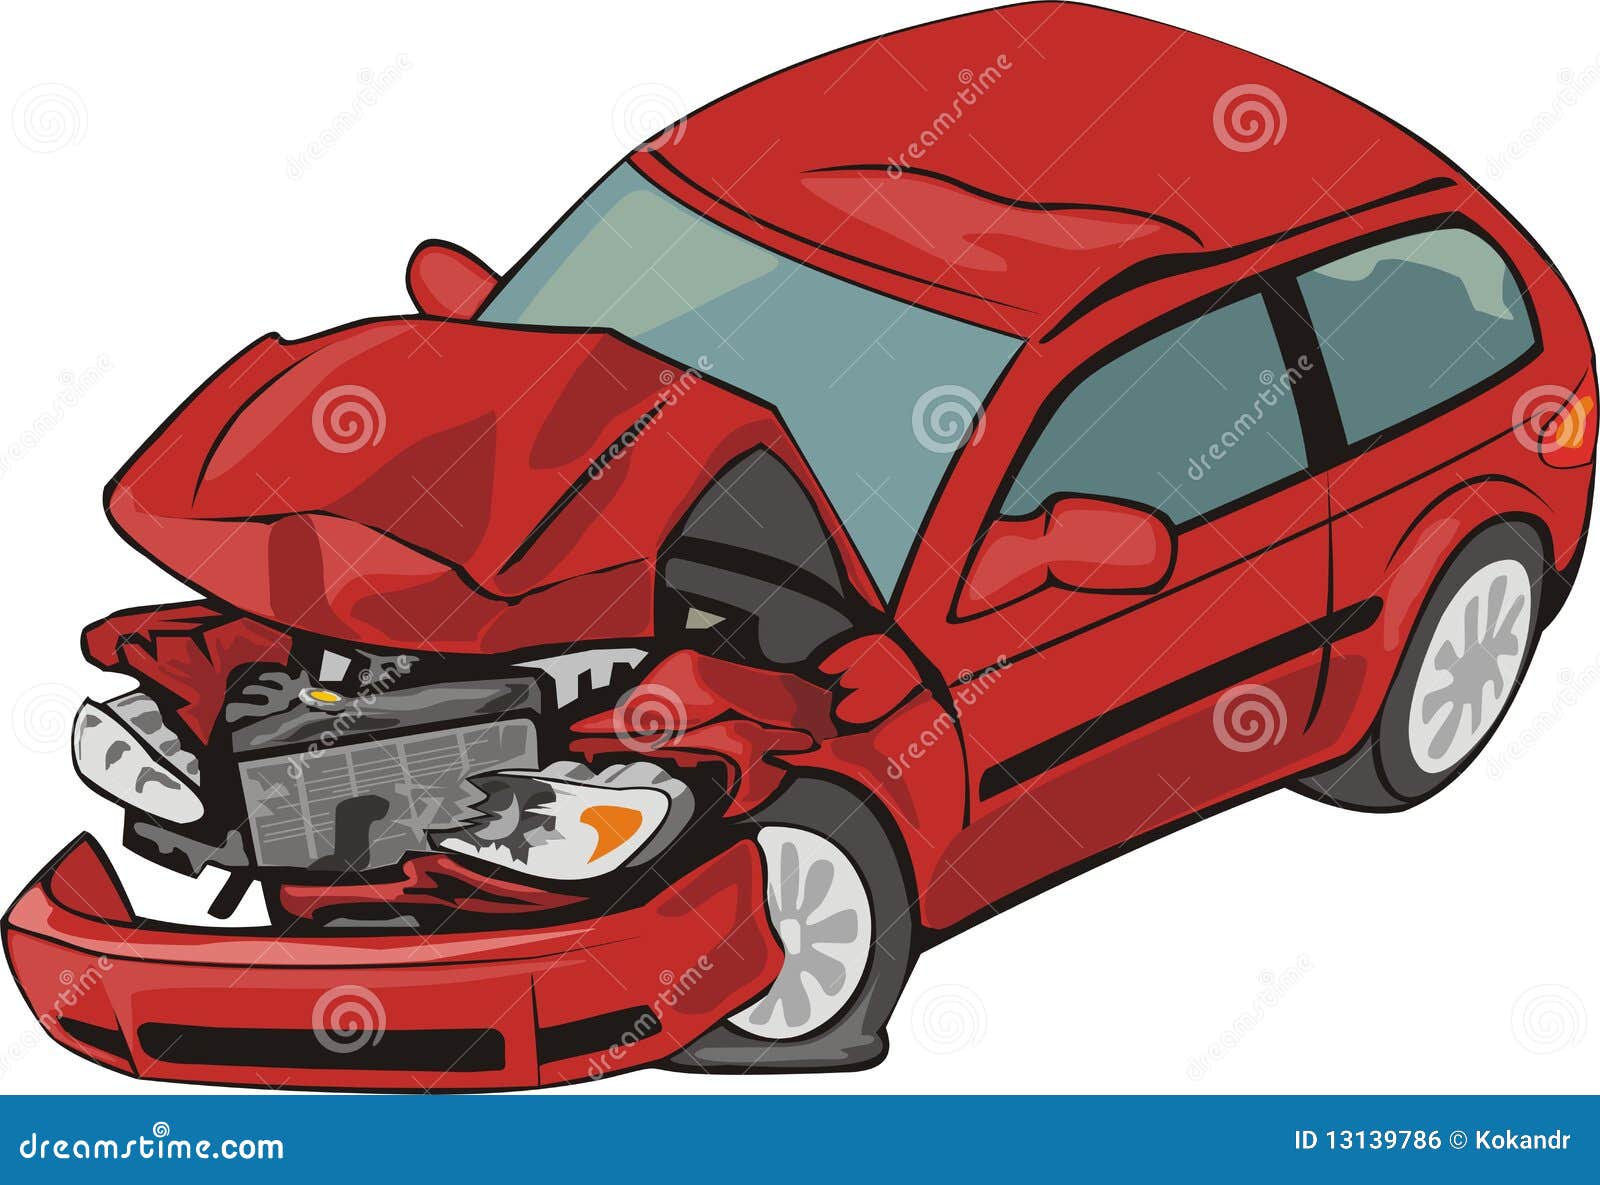 free clipart auto accident - photo #33